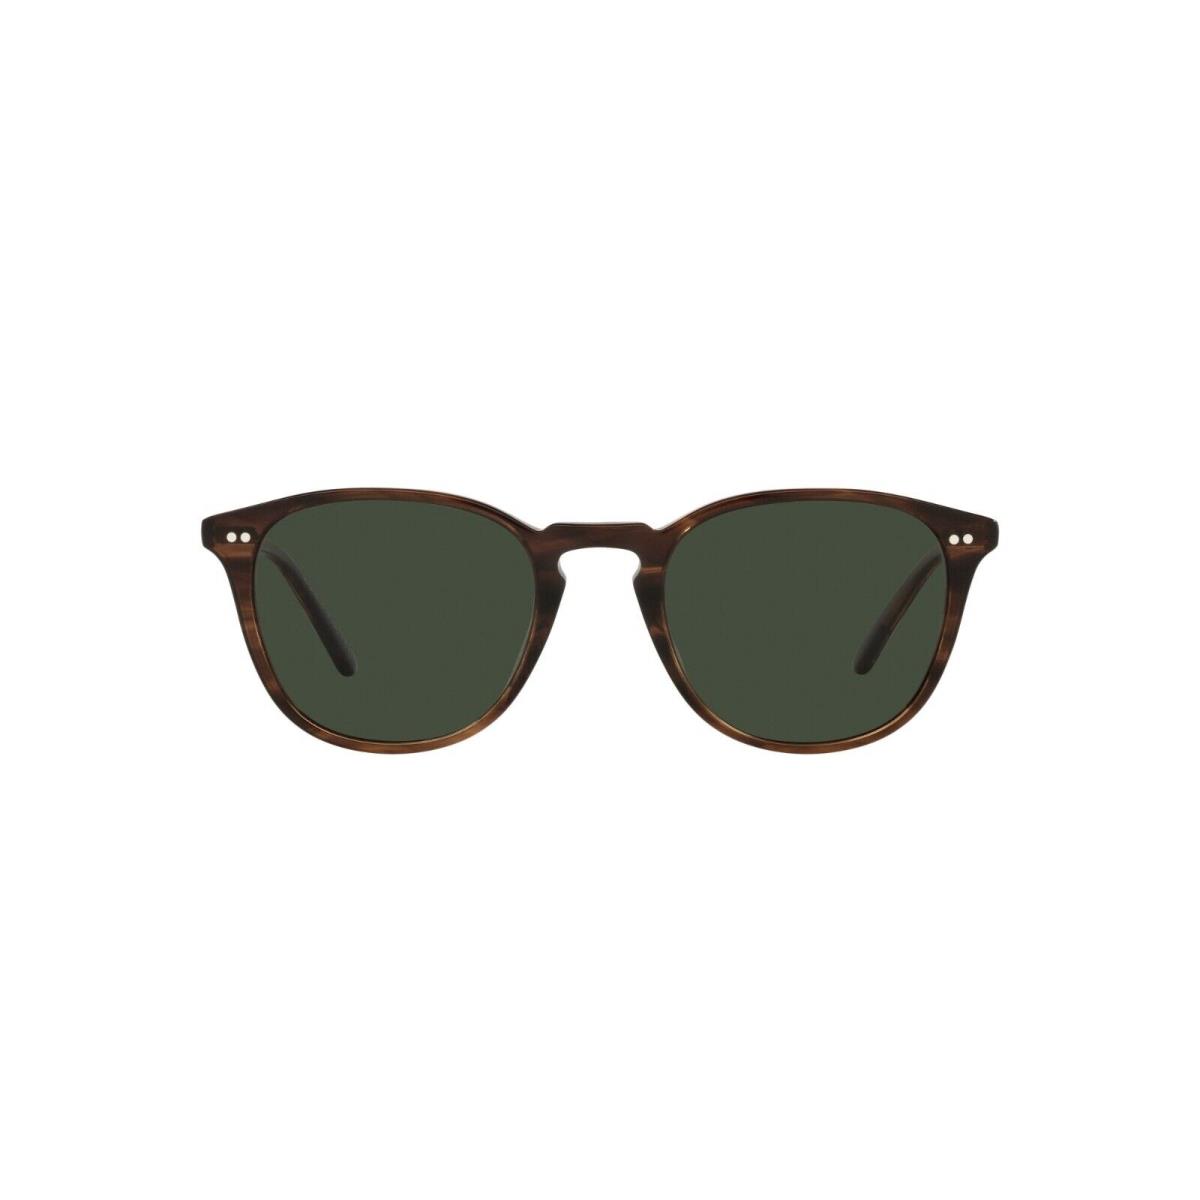 Oliver Peoples Forman L.a. OV 5414SU Tuscany Tortoise/G-15 1724/9A Sunglasses